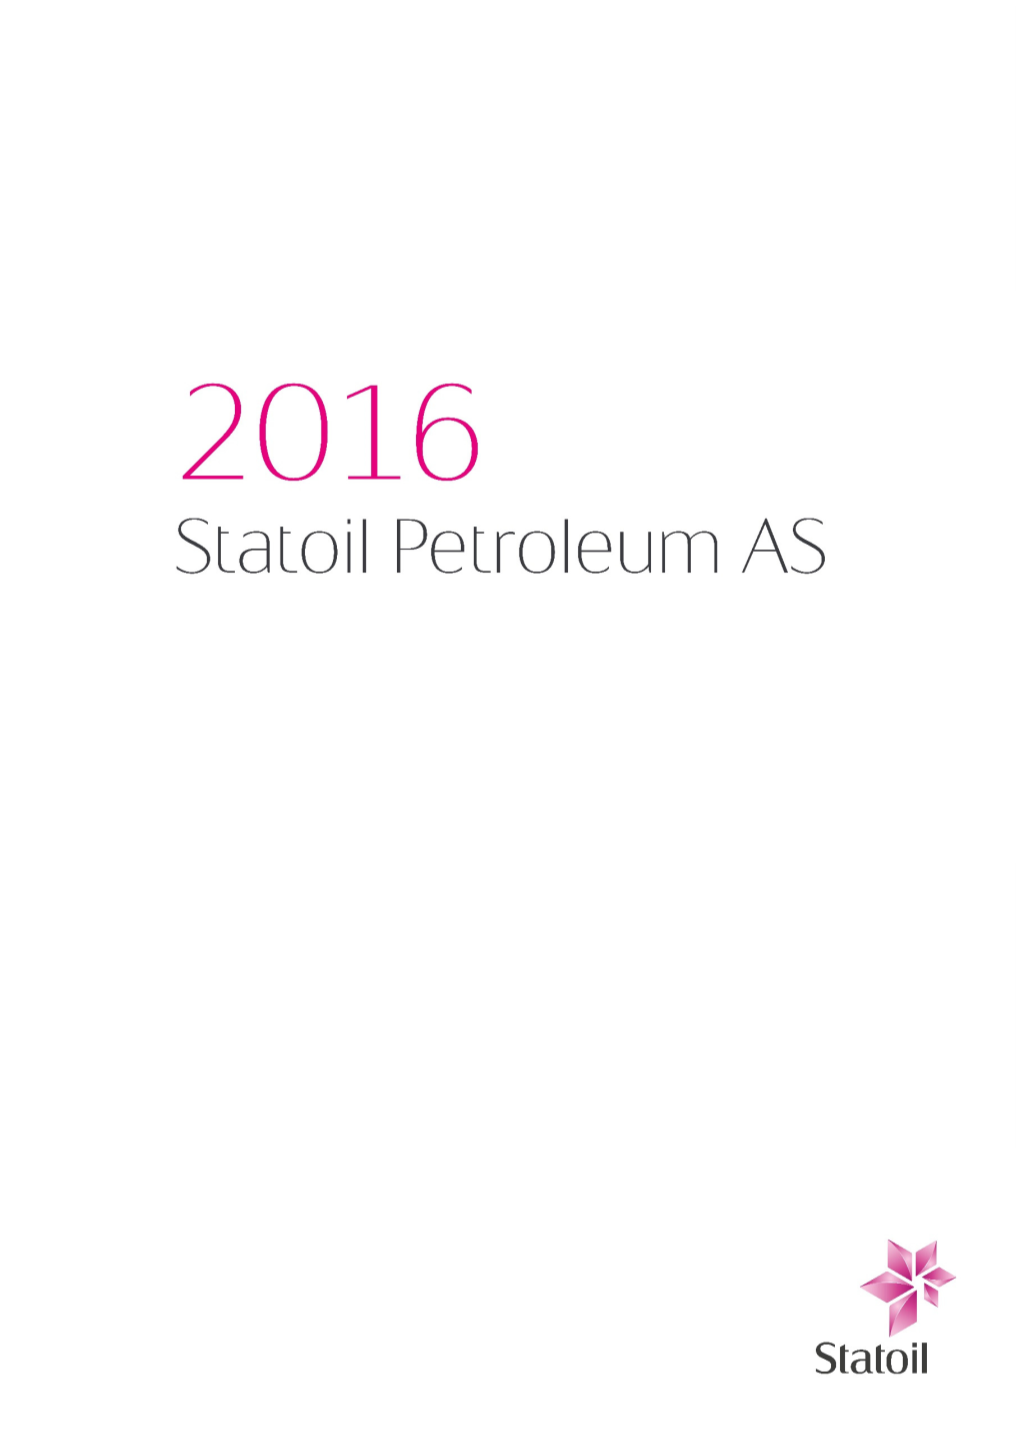 2016 Statoil Petroleum AS